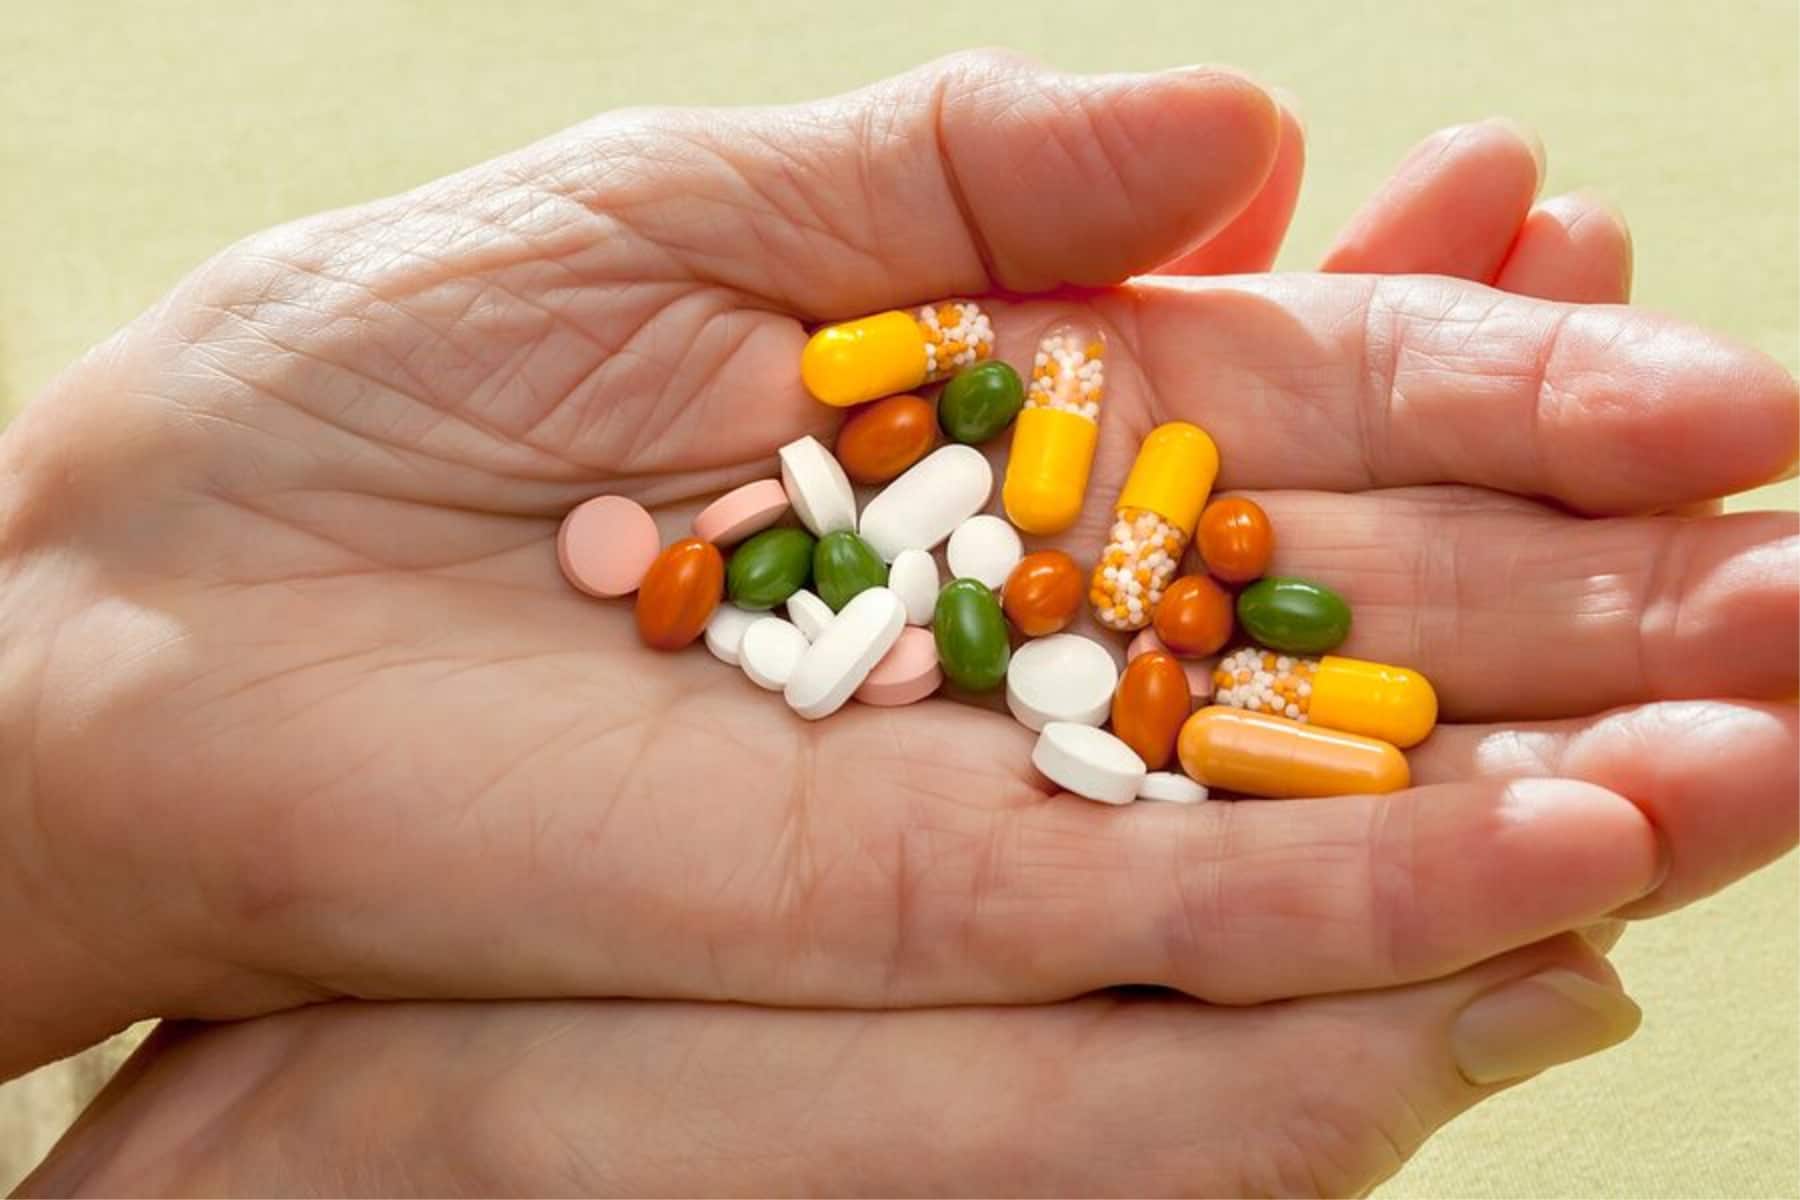 Home Health Care in Suwanee GA: Medication Reminders